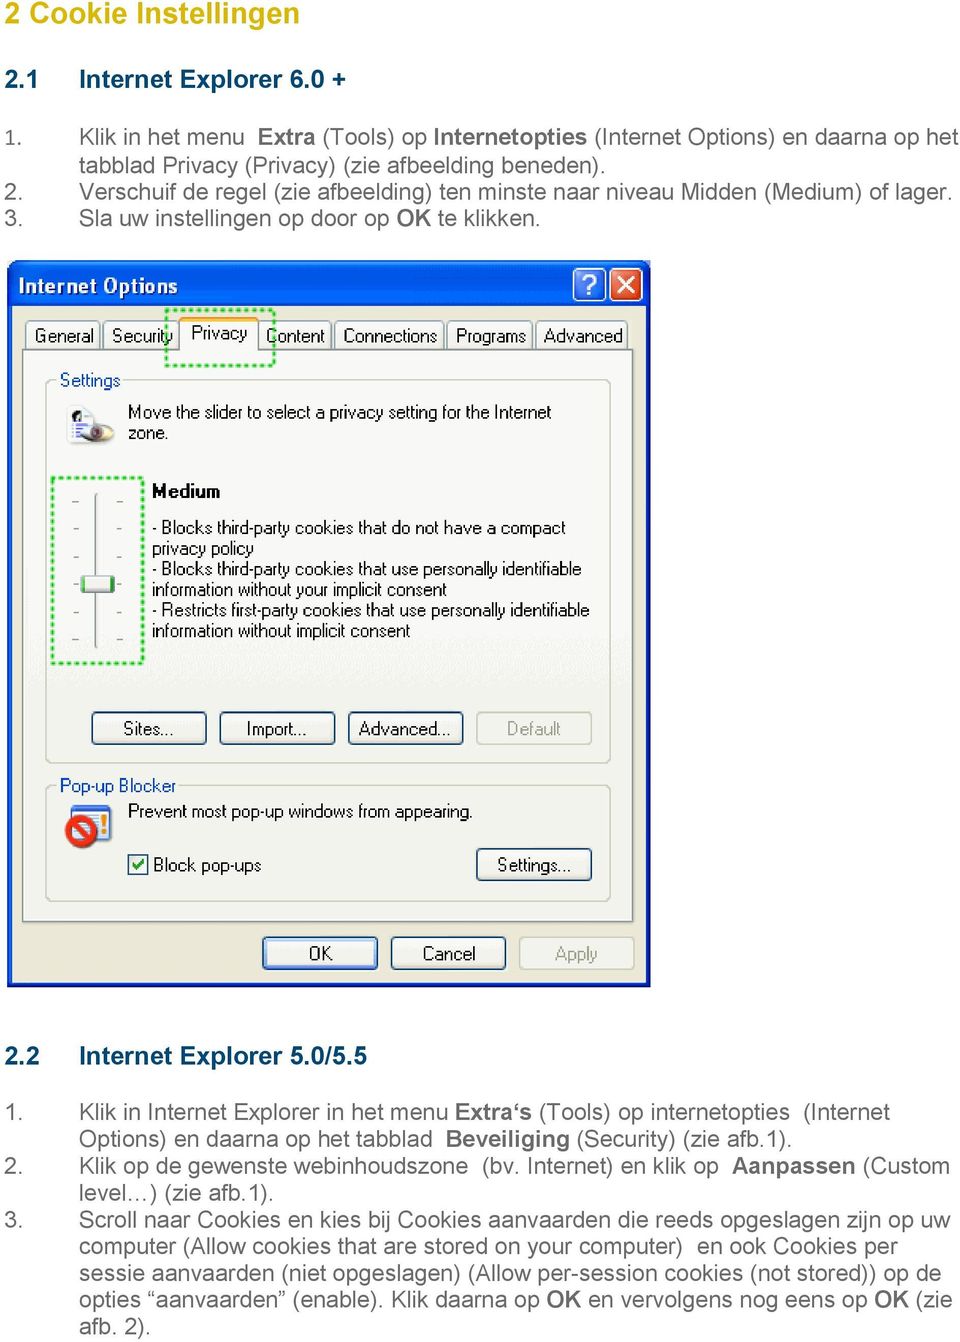 Klik in Internet Explorer in het menu Extra s (Tools) op internetopties (Internet Options) en daarna op het tabblad Beveiliging (Security) (zie afb.1). 2. Klik op de gewenste webinhoudszone (bv.